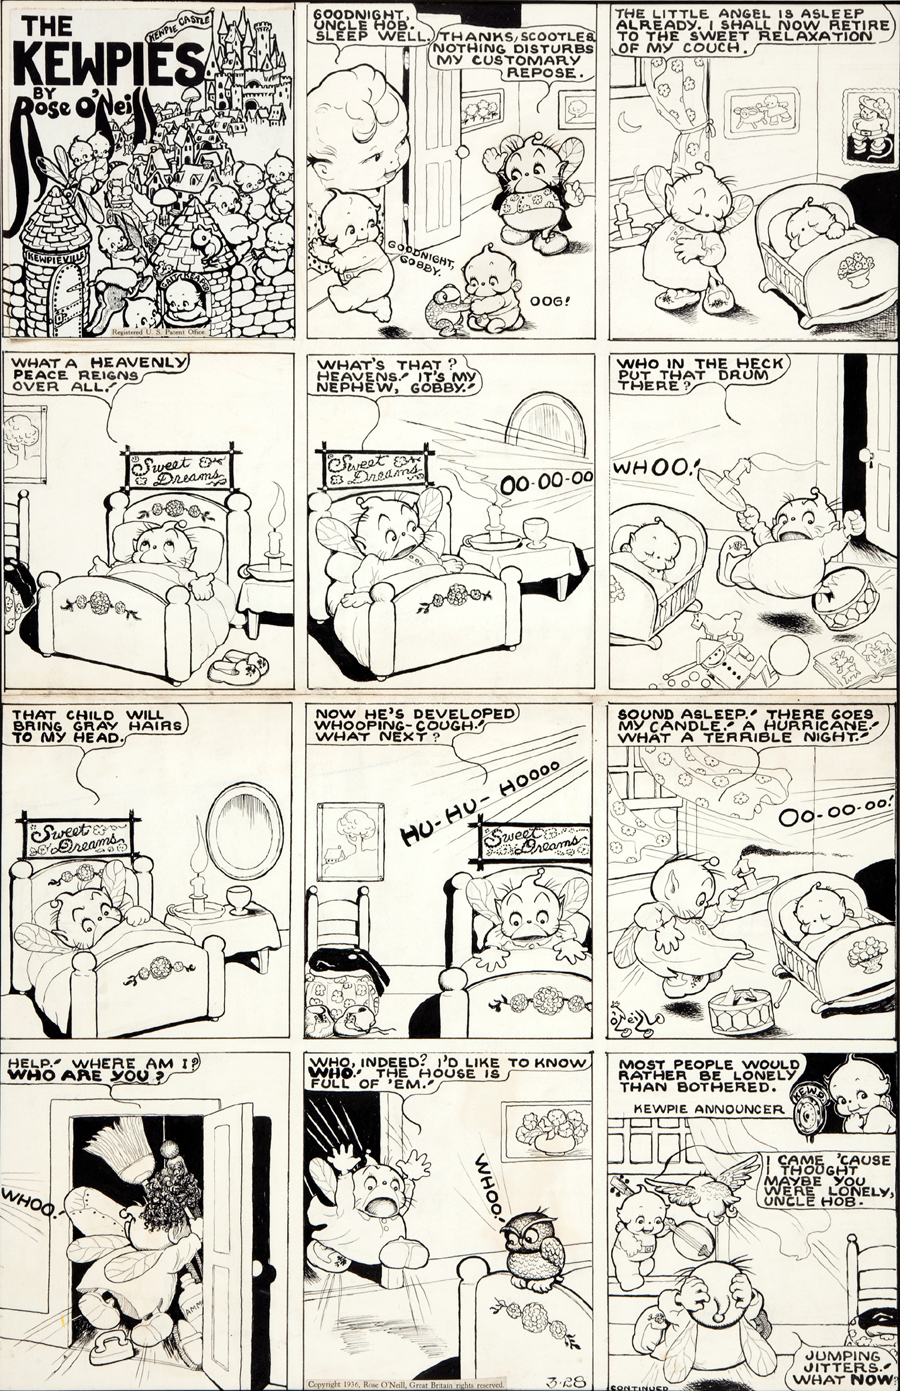 “The Kewpies” Sunday comic strip, March 28, 1936